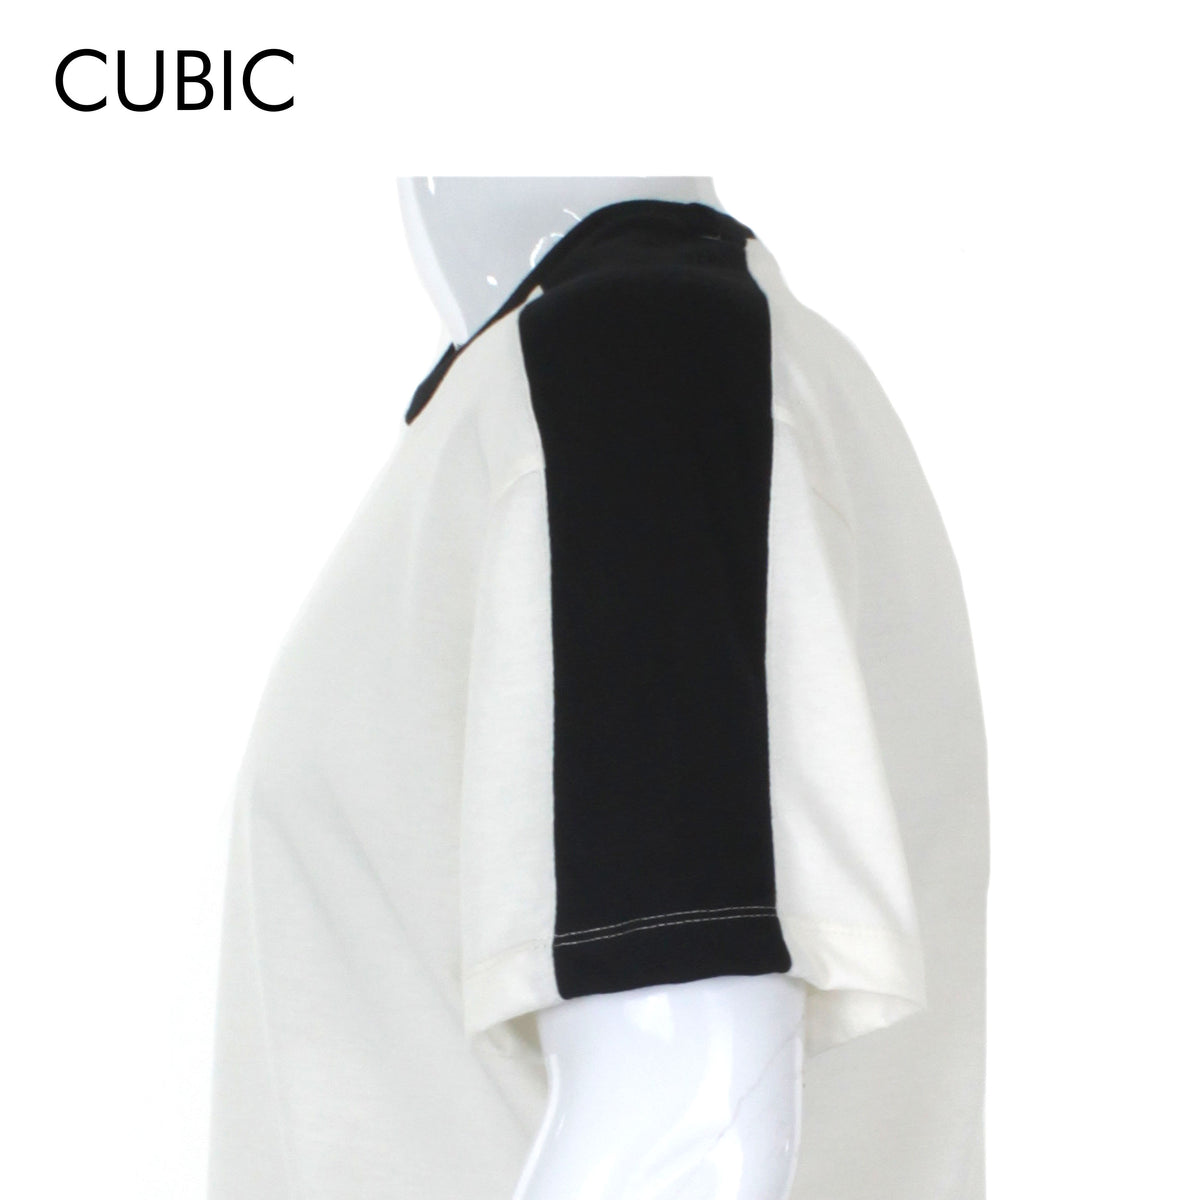 Cubic Mens Round Neck Tees T-Shirt Plain Shirt Top Top for Men - CMJ2355R